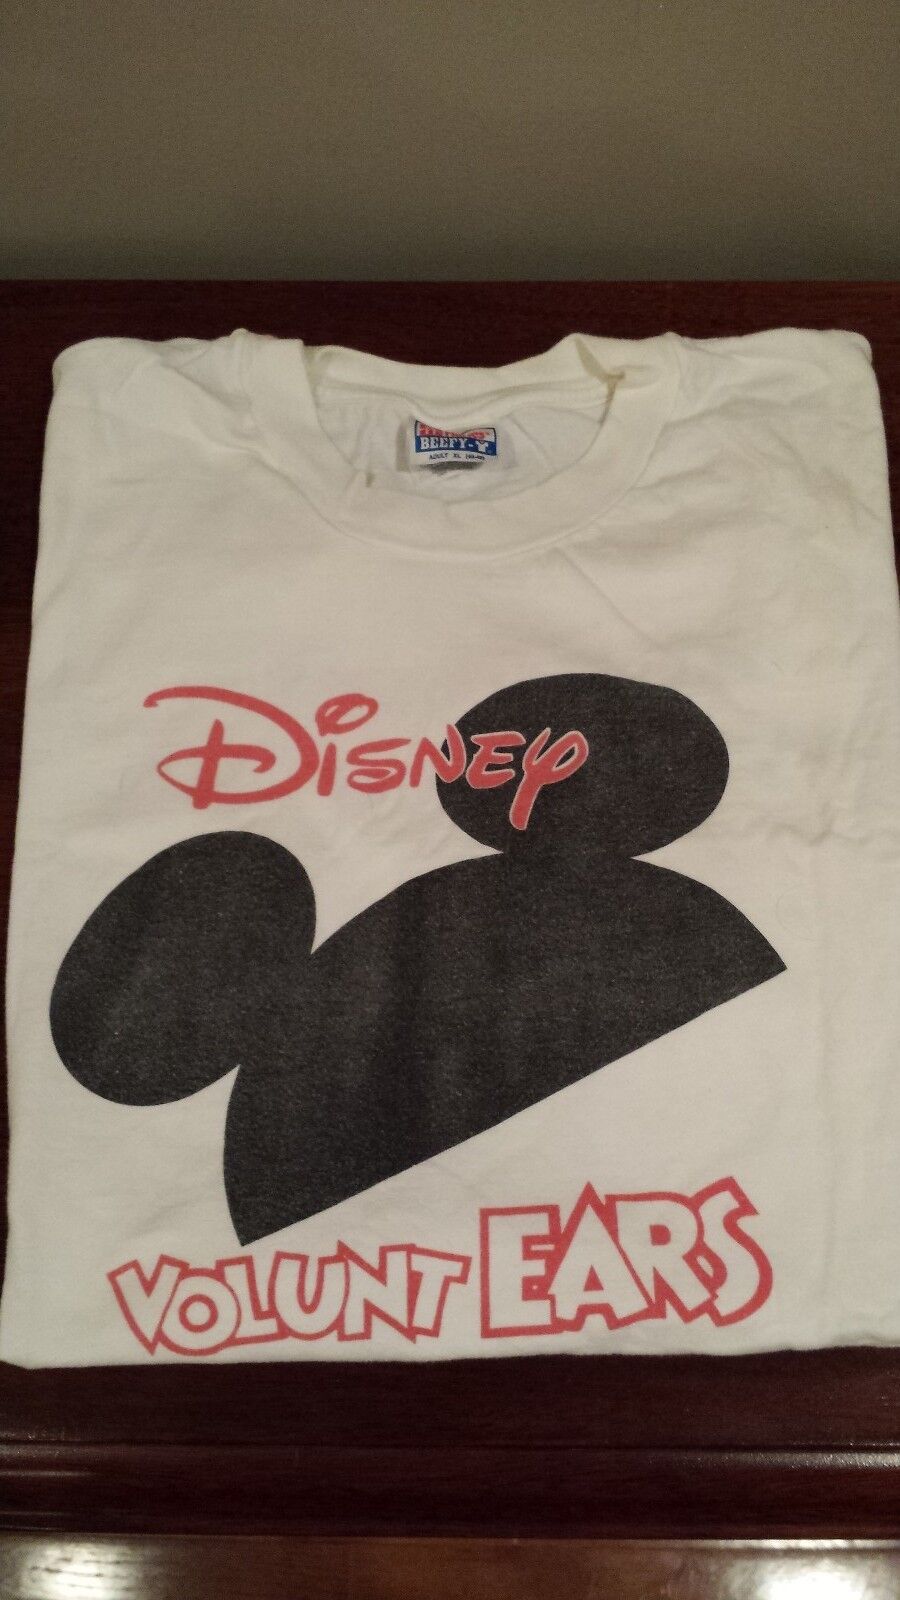 Vintage Disney Store VOLUNTEARS T-shirt - 10th Anniversary (1997) Rare XL